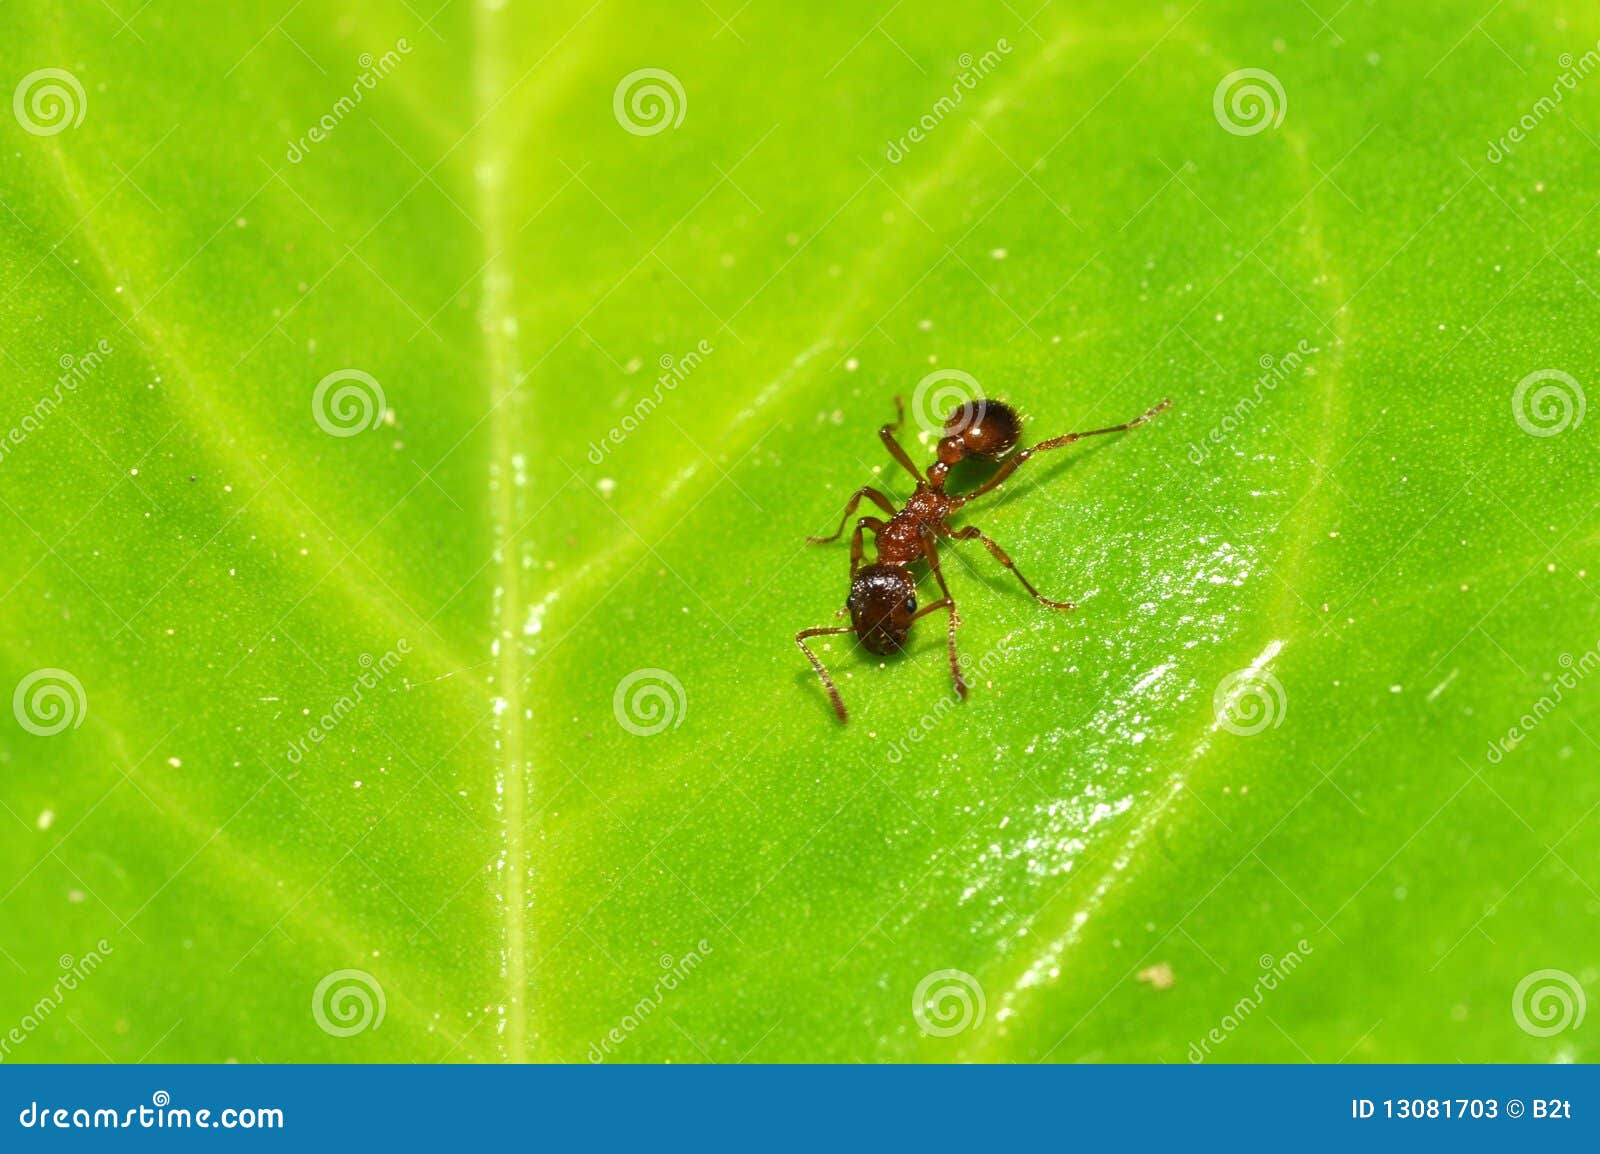 18,304 Small Ant Stock Photos - Free & Royalty-Free Stock Photos